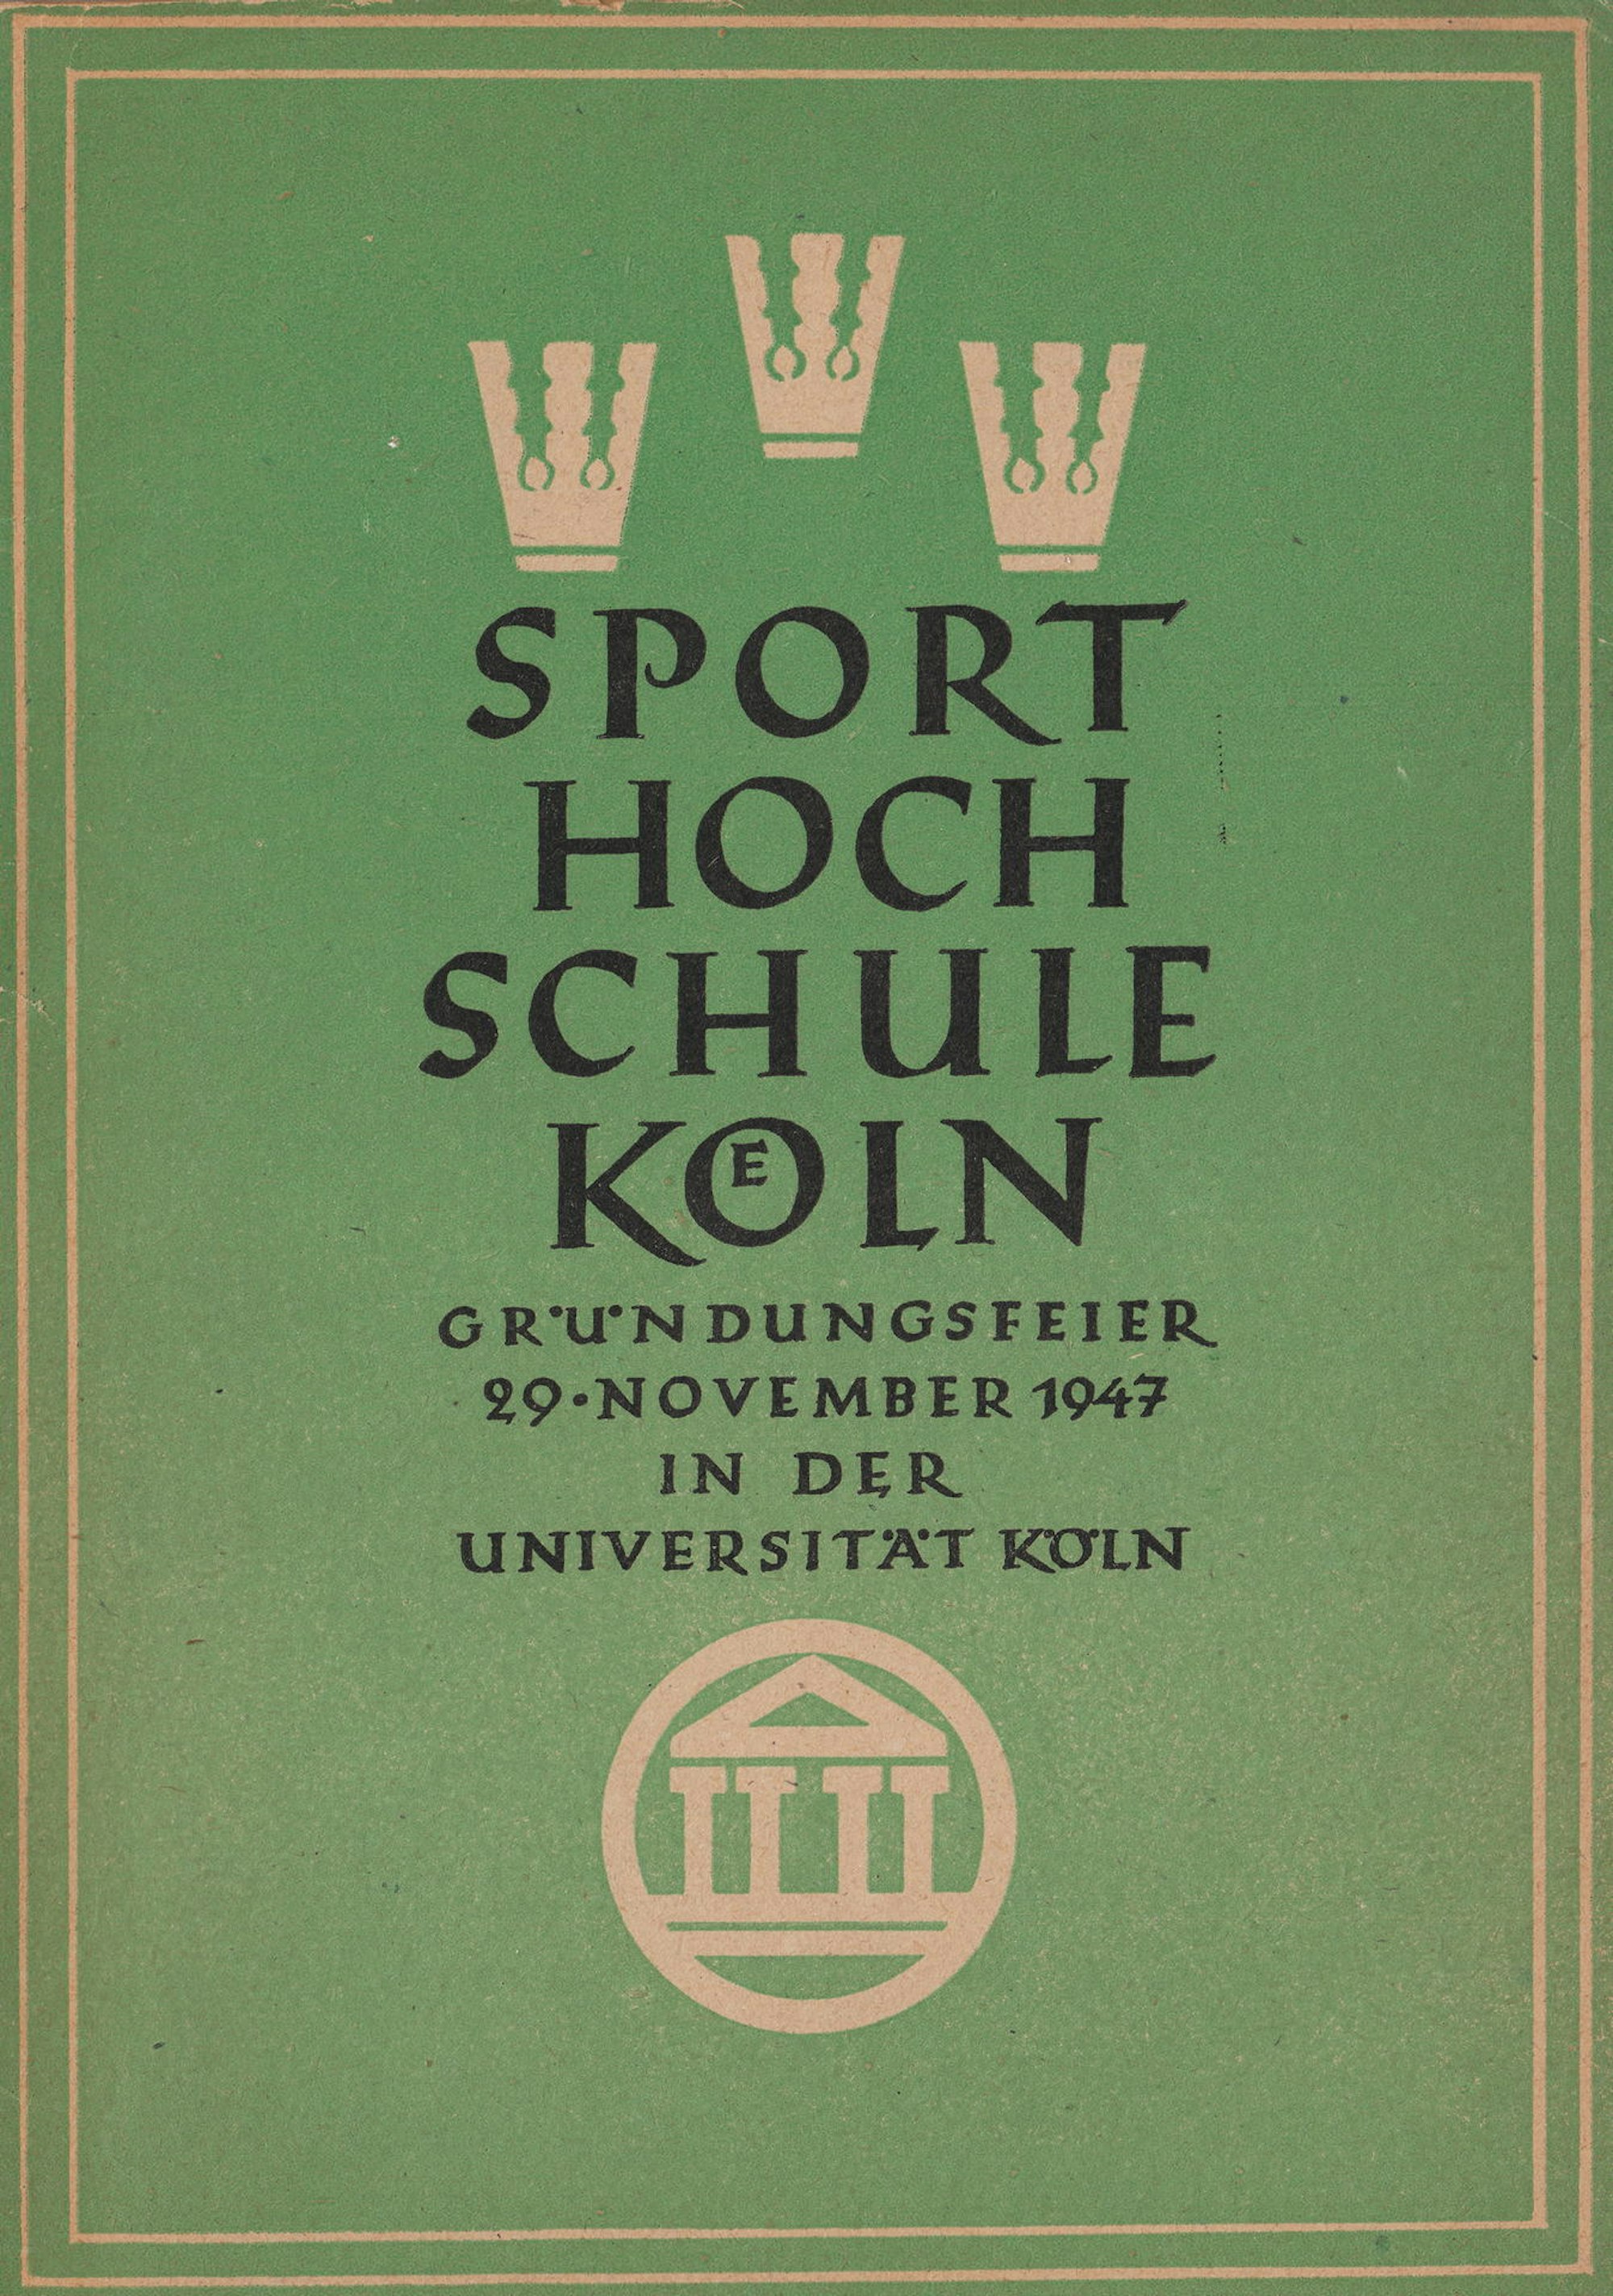 DtSporthochshule Köln